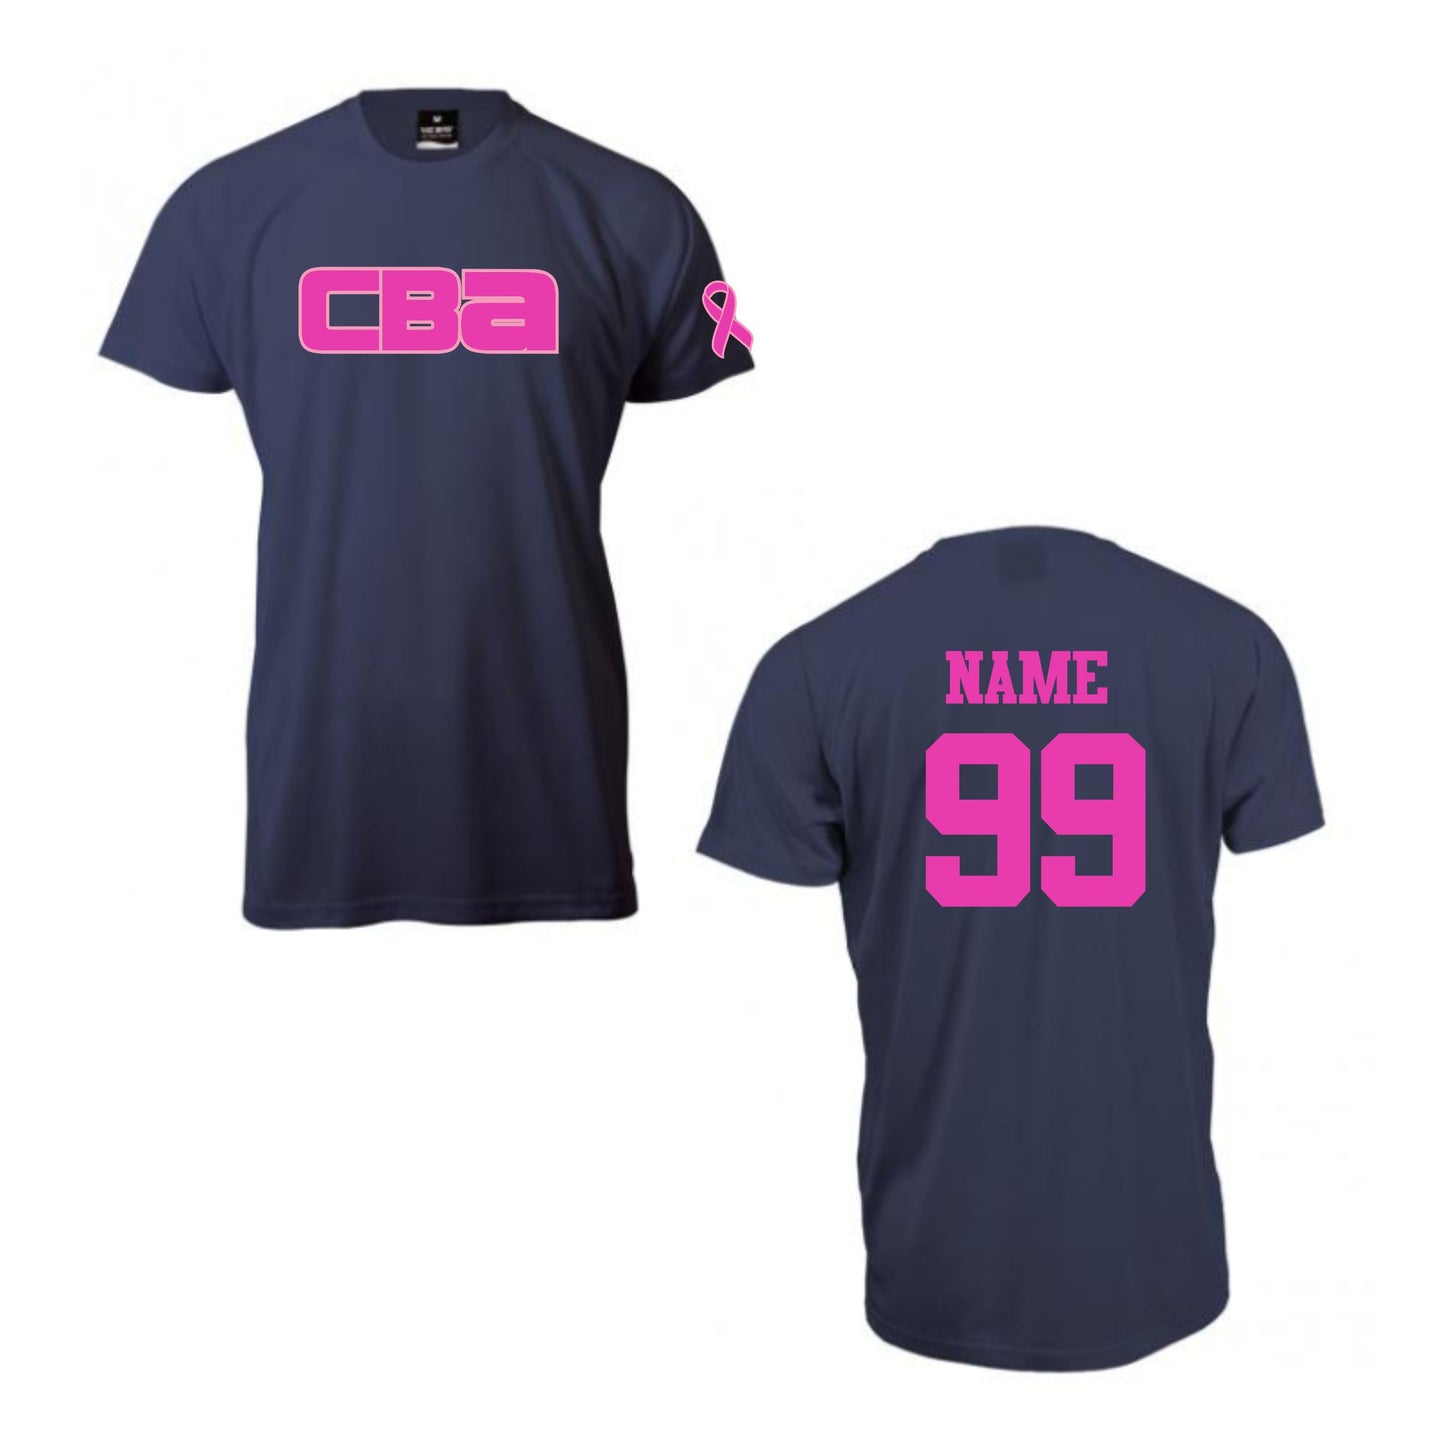 CBA Pink Dri Fit T-Shirt - Navy